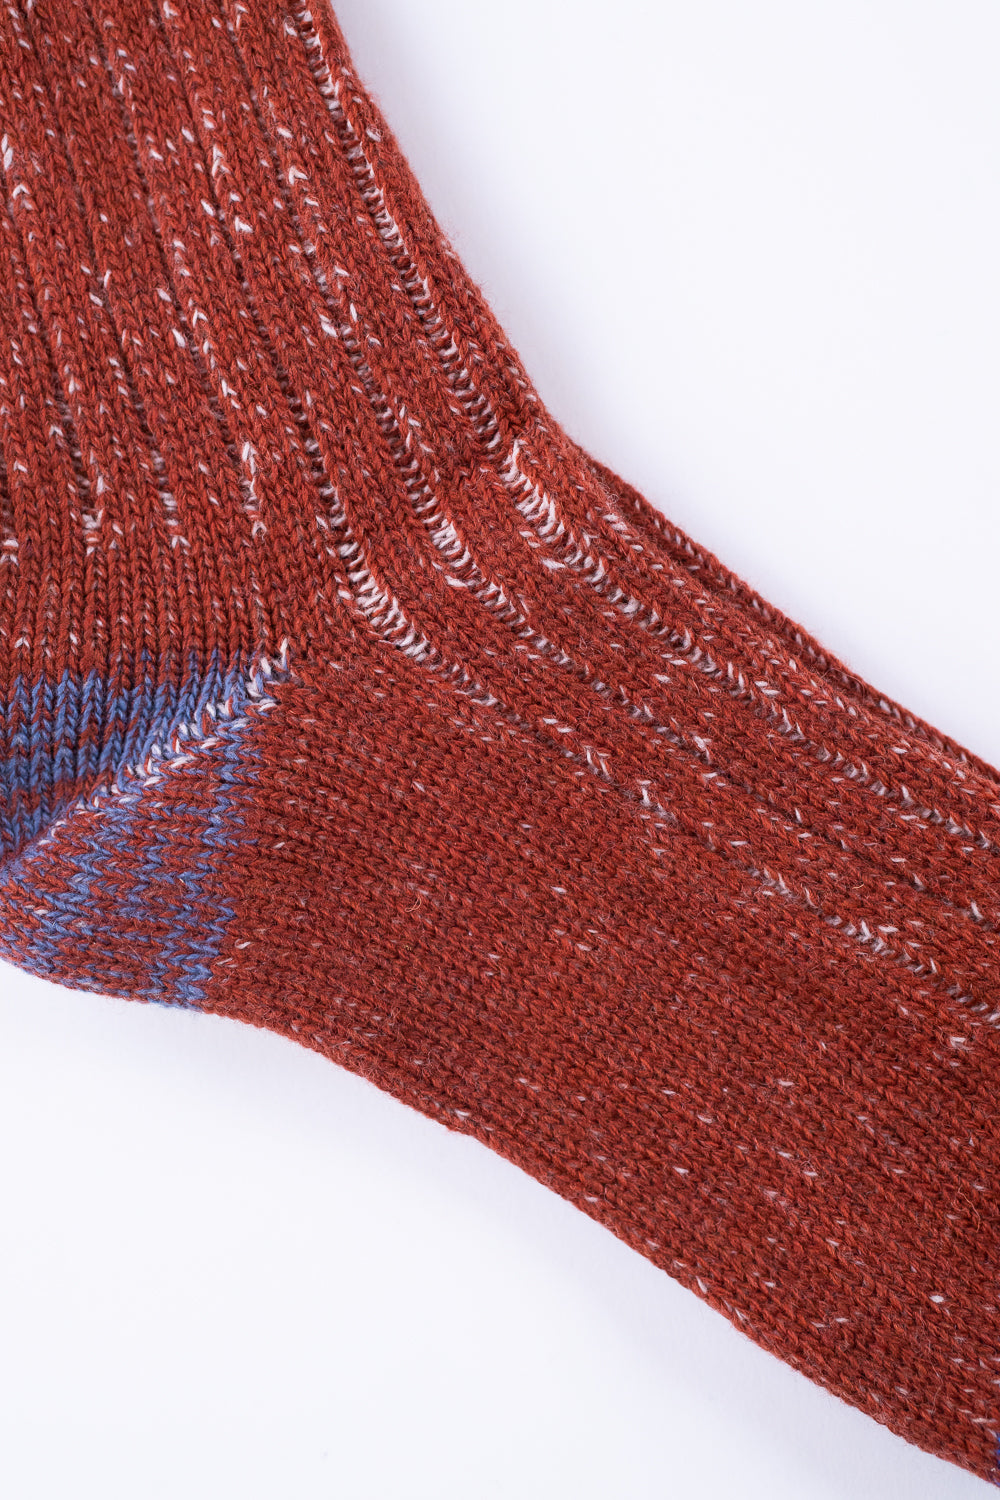 MW72.1502 - Extra Fine Merino Wool Socks - Chestnut, Nature